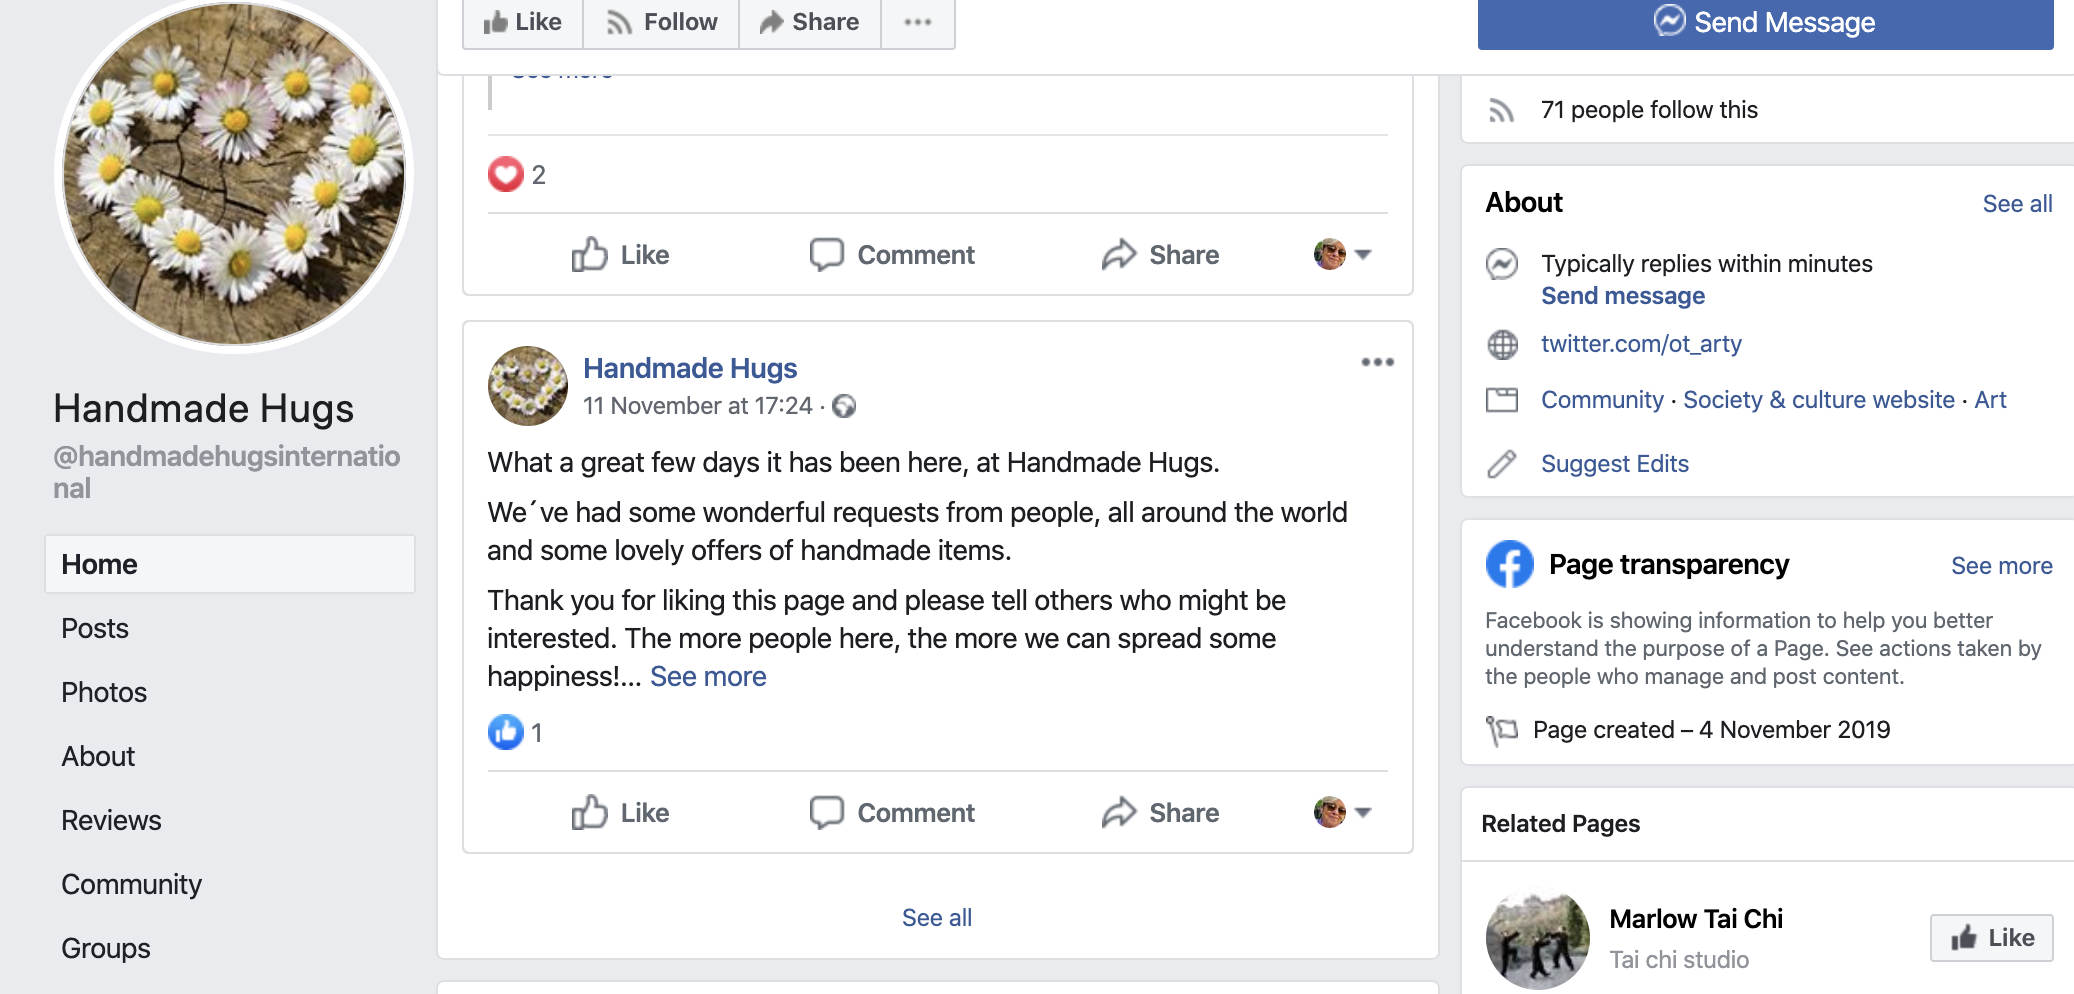 Handmade Hugs featured image